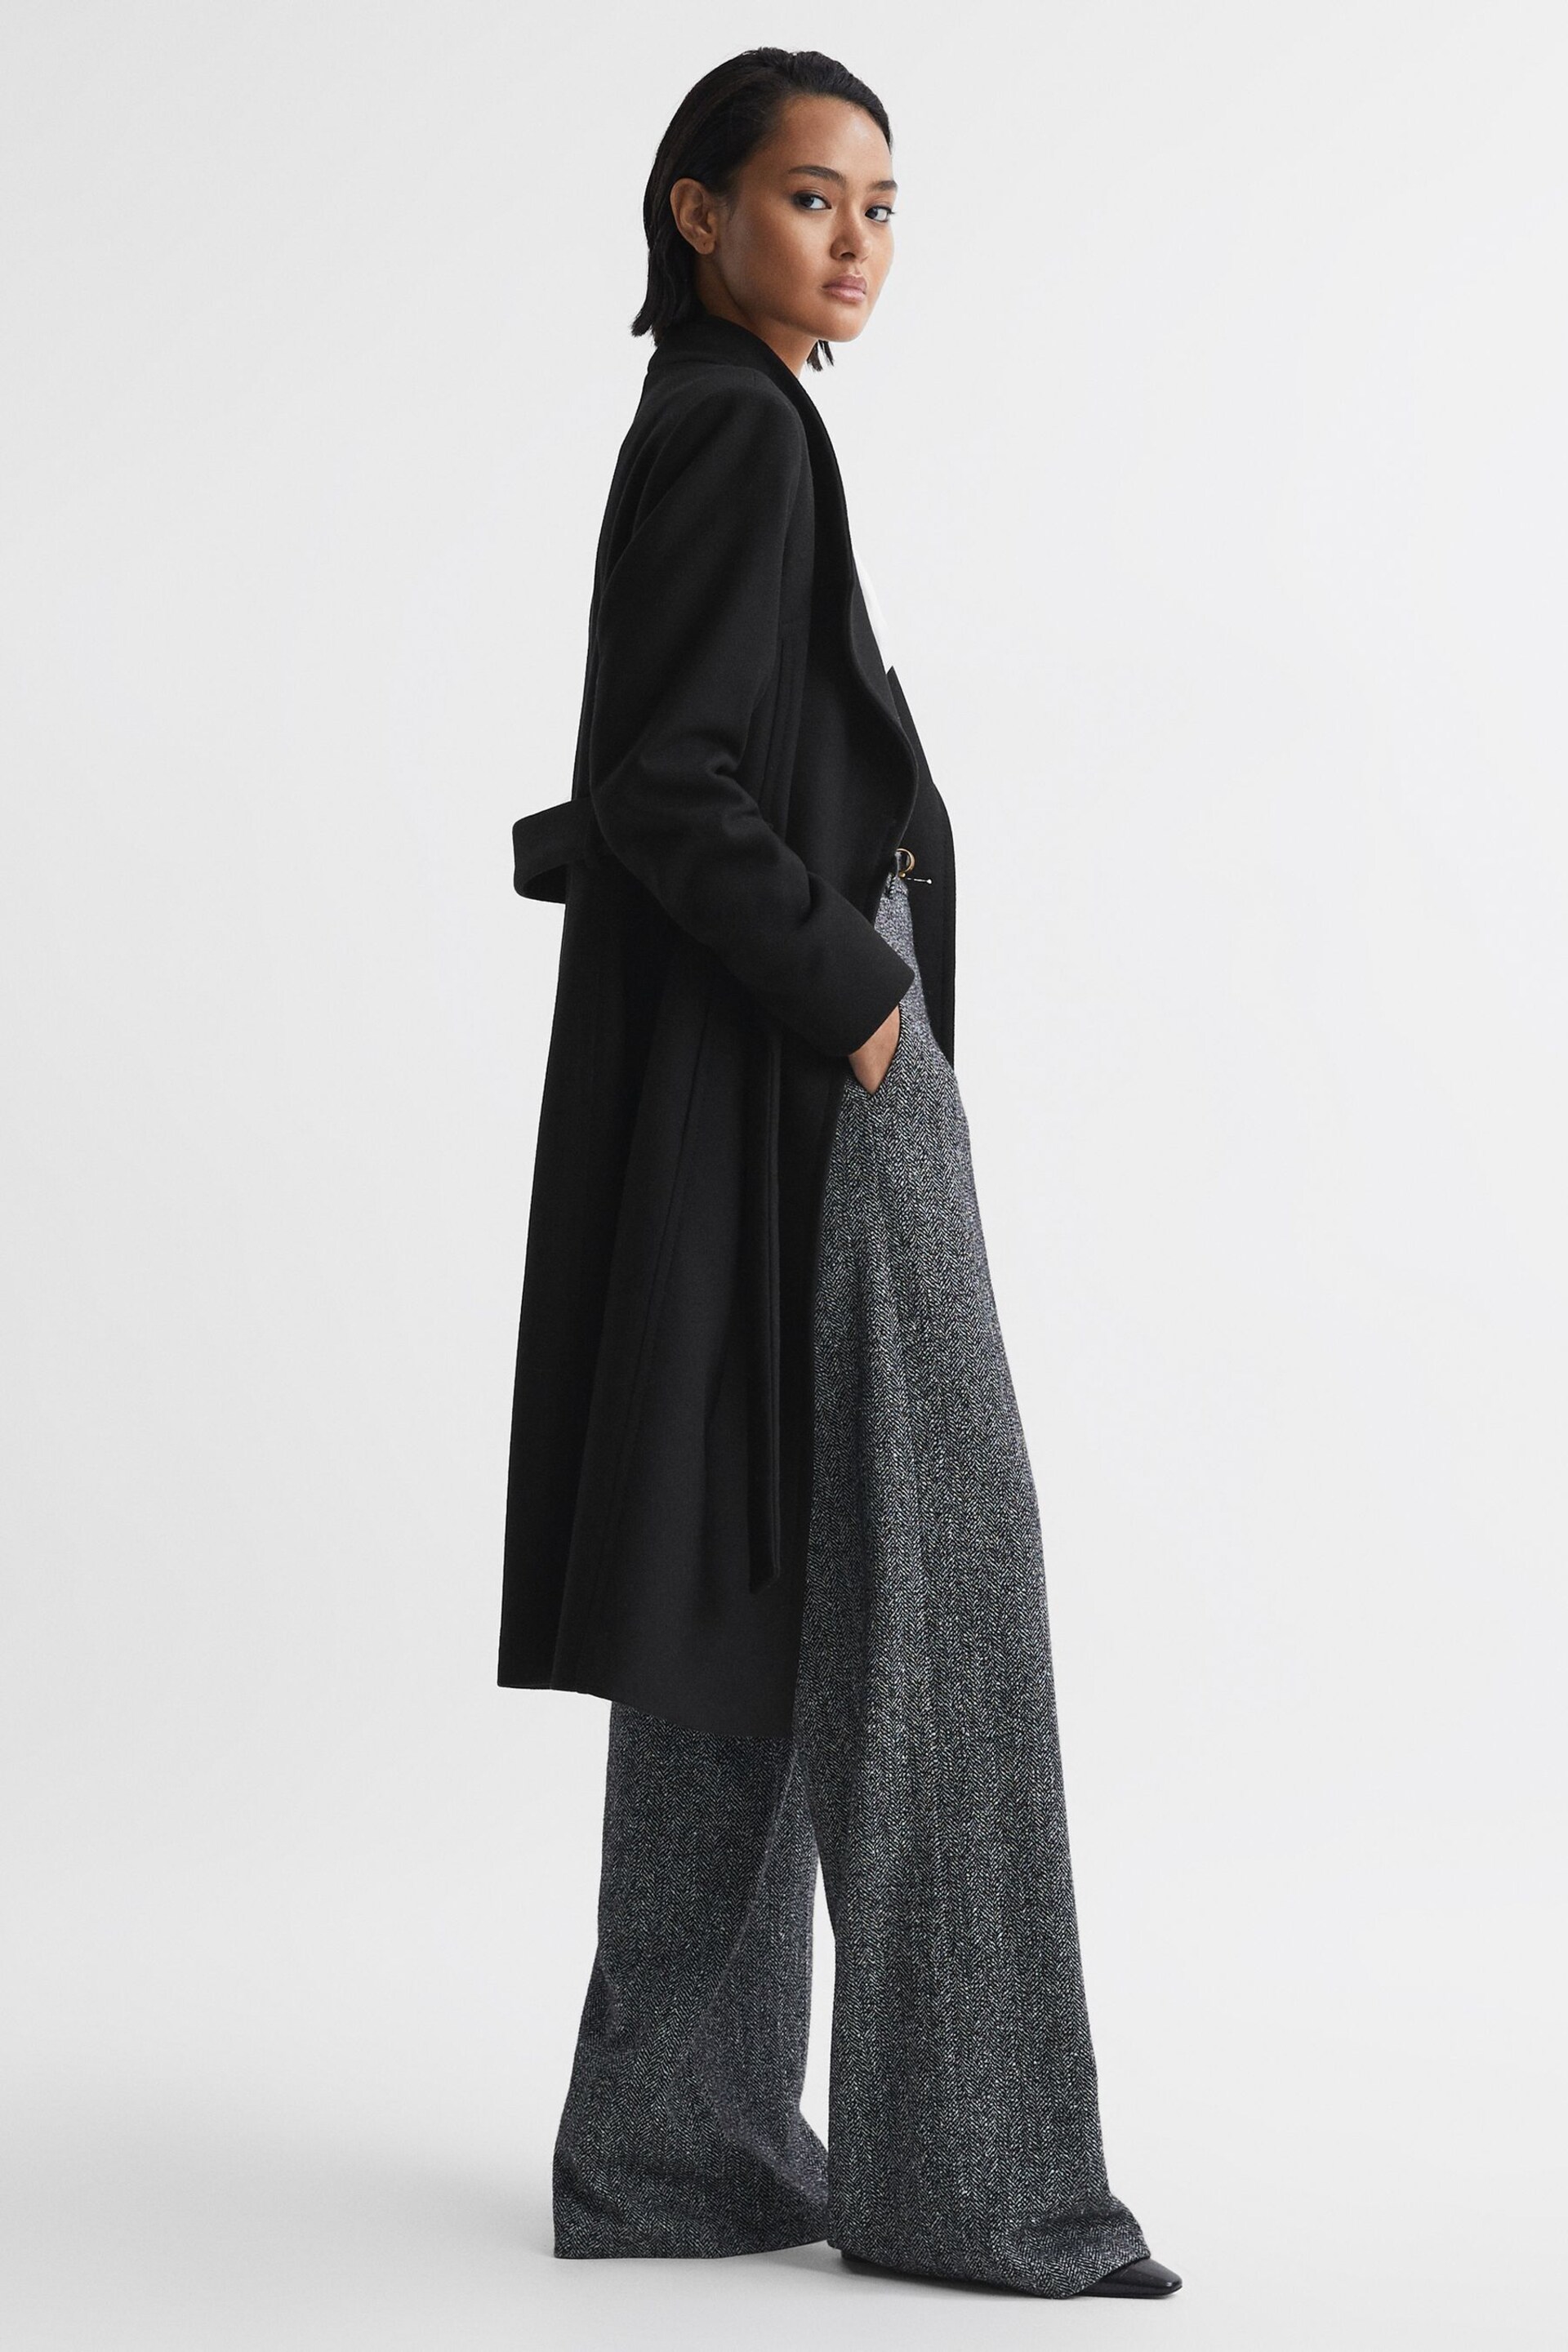 Reiss Black Freja Tailored Wool Blend Longline Coat - Image 4 of 6